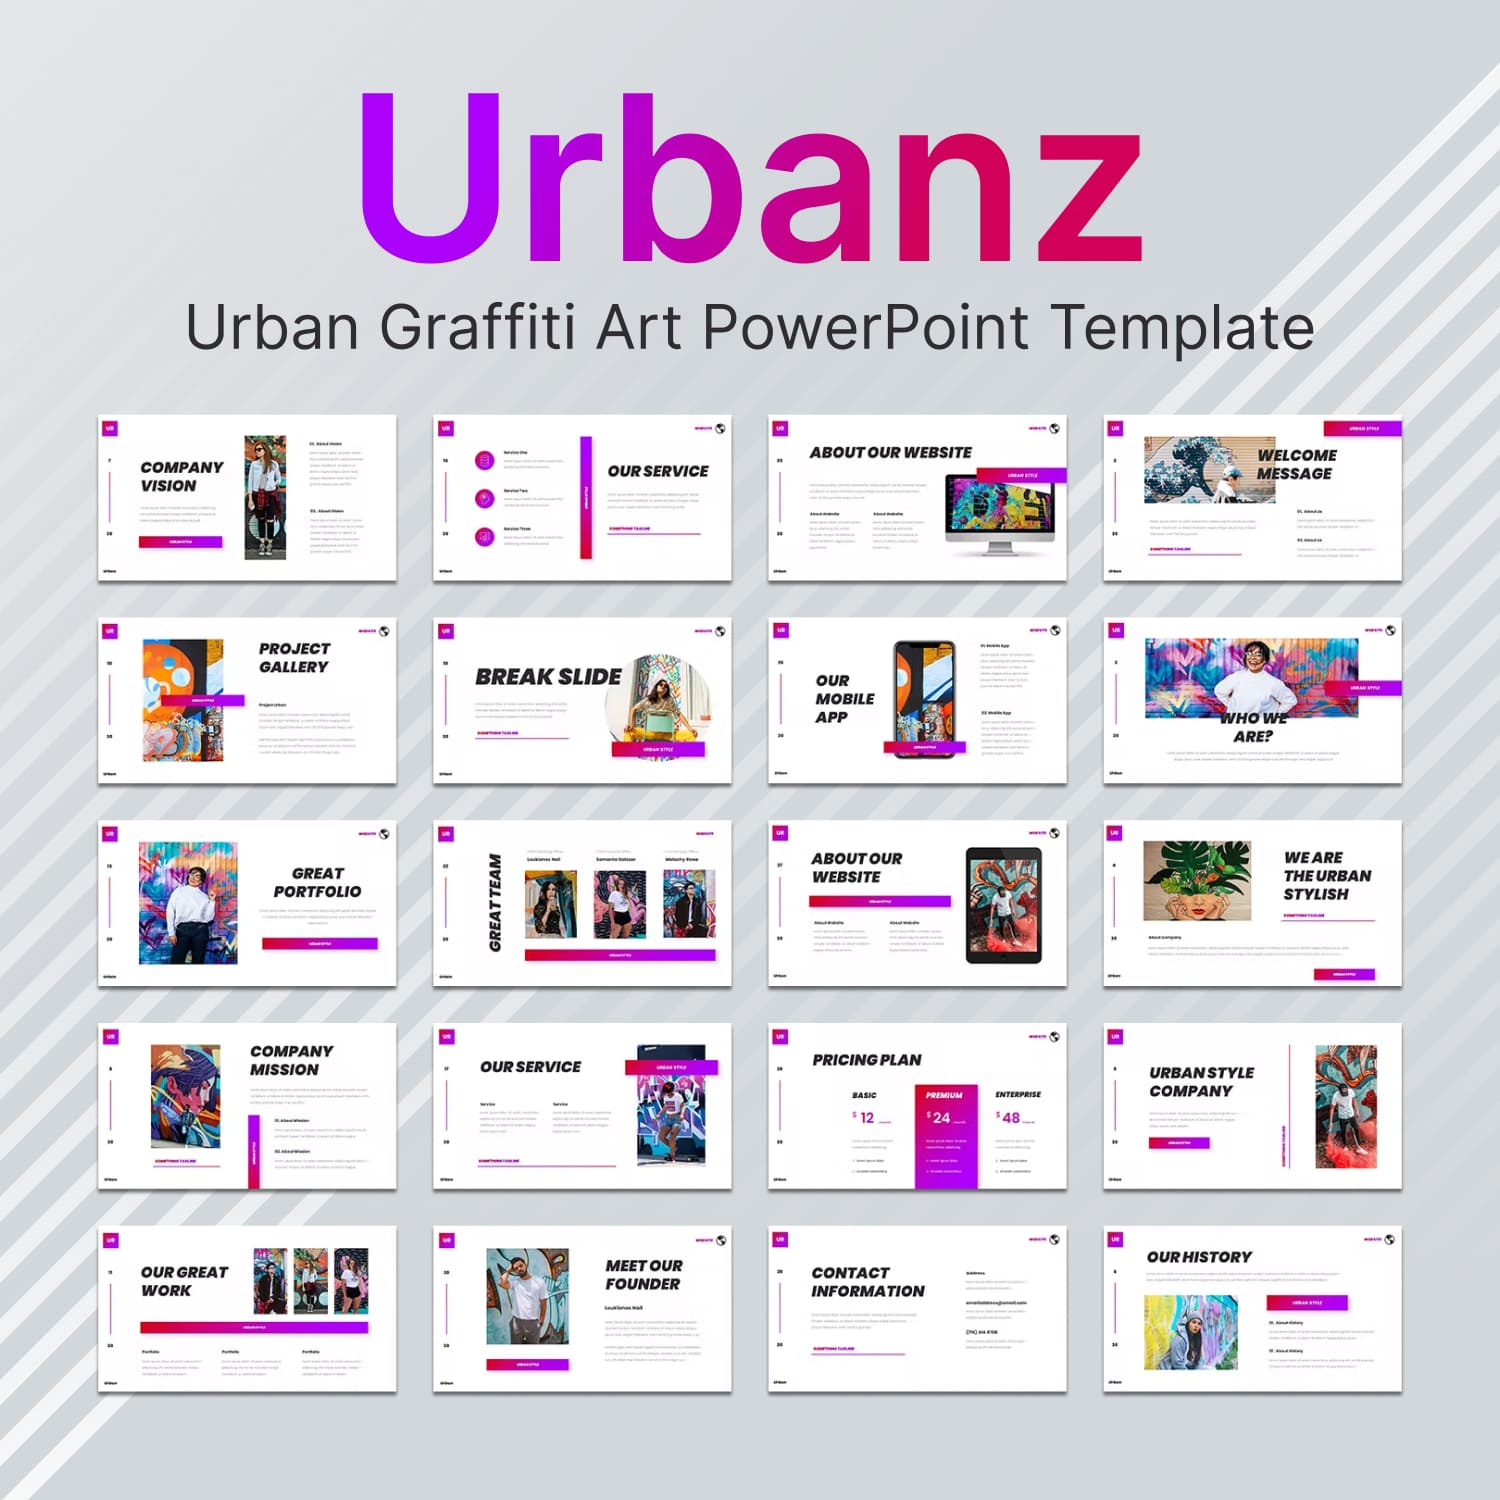 Urbanz urban graffiti art powerpoint template - main image preview.